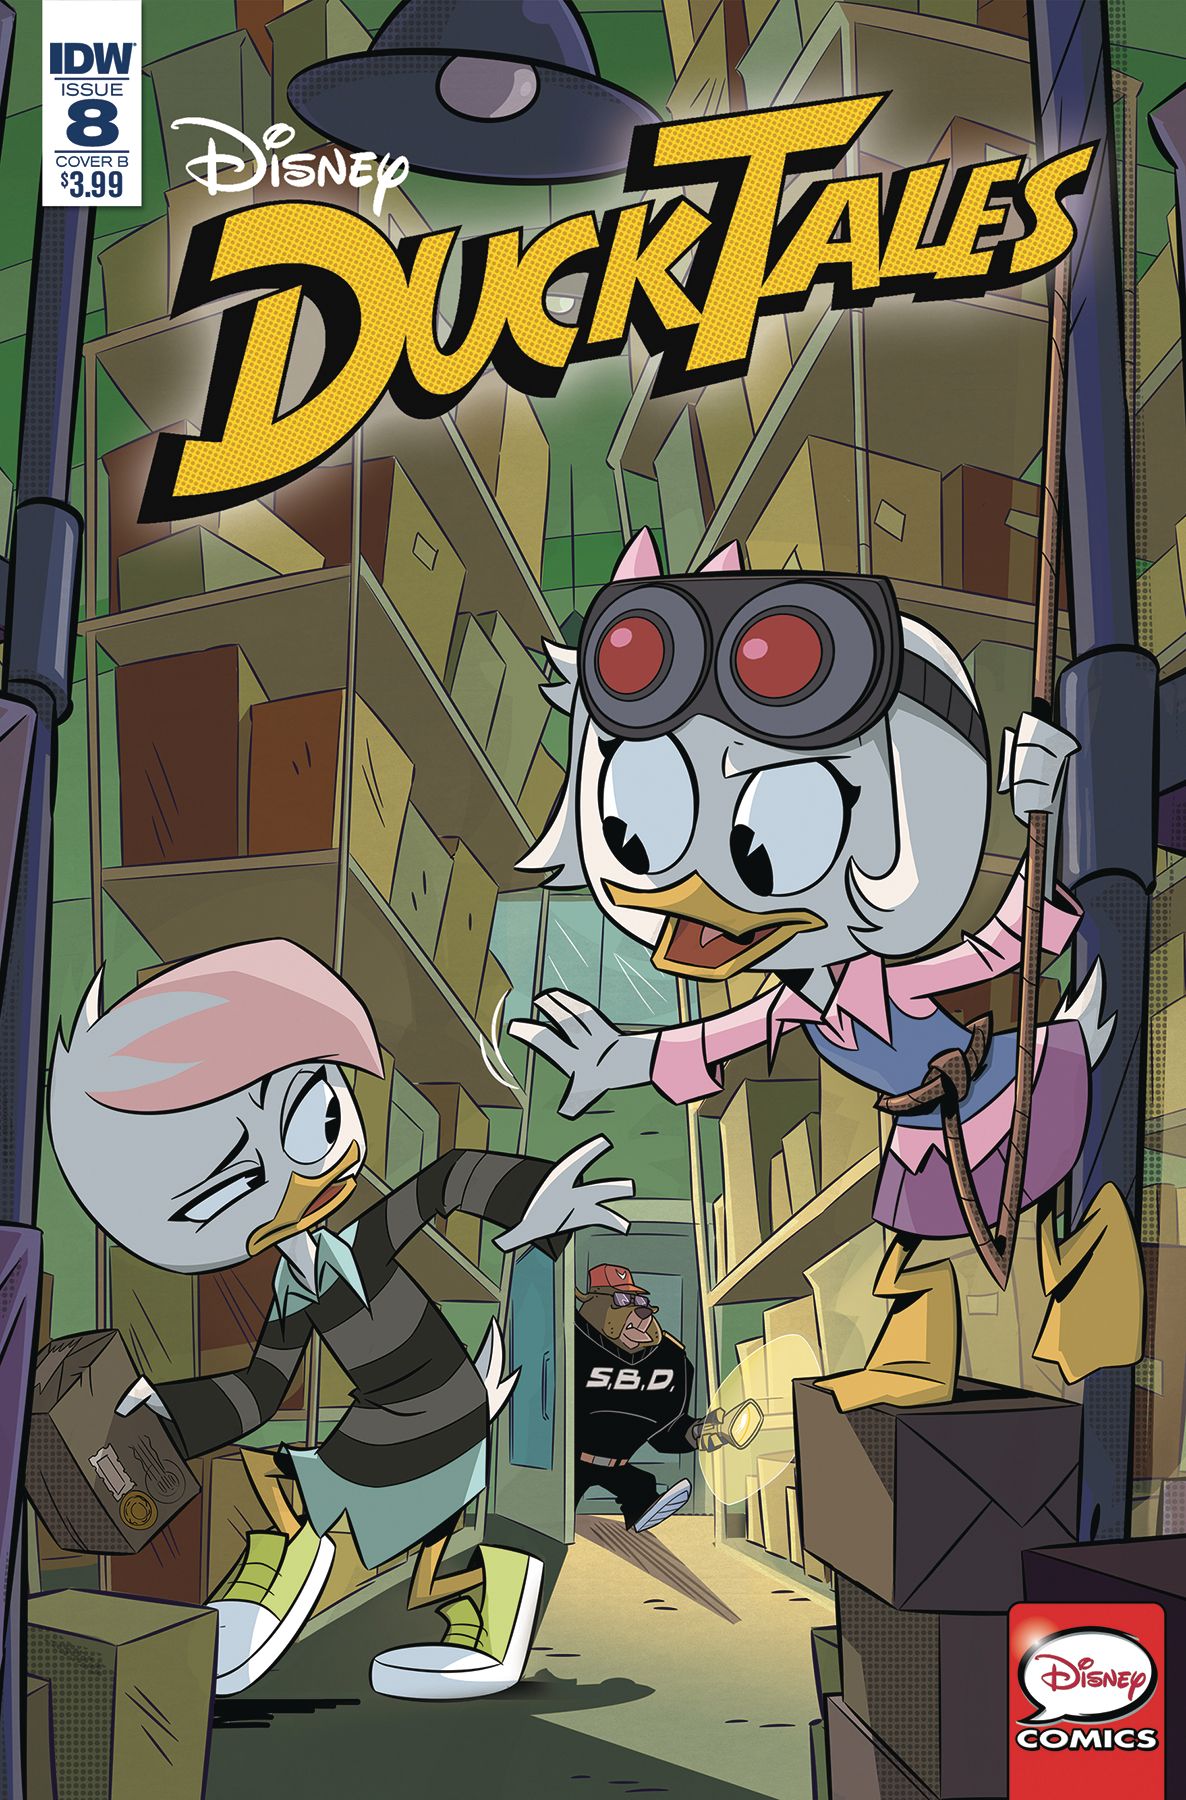 Cover B - Ghiglione Ducktales #11